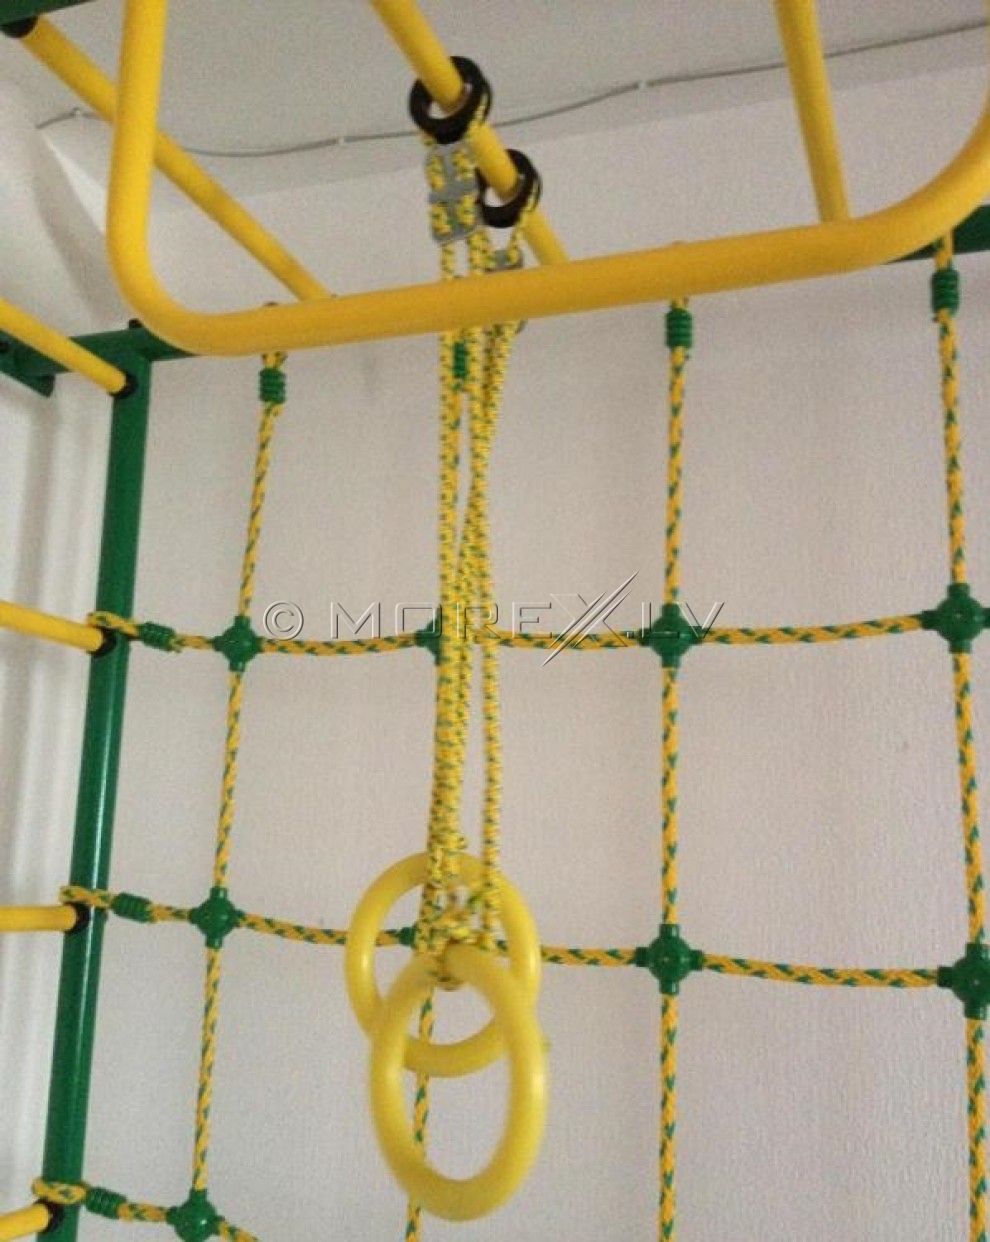 Bērnu sporta komplekss Pioner-8 zaļi-dzeltens (zviedru siena)